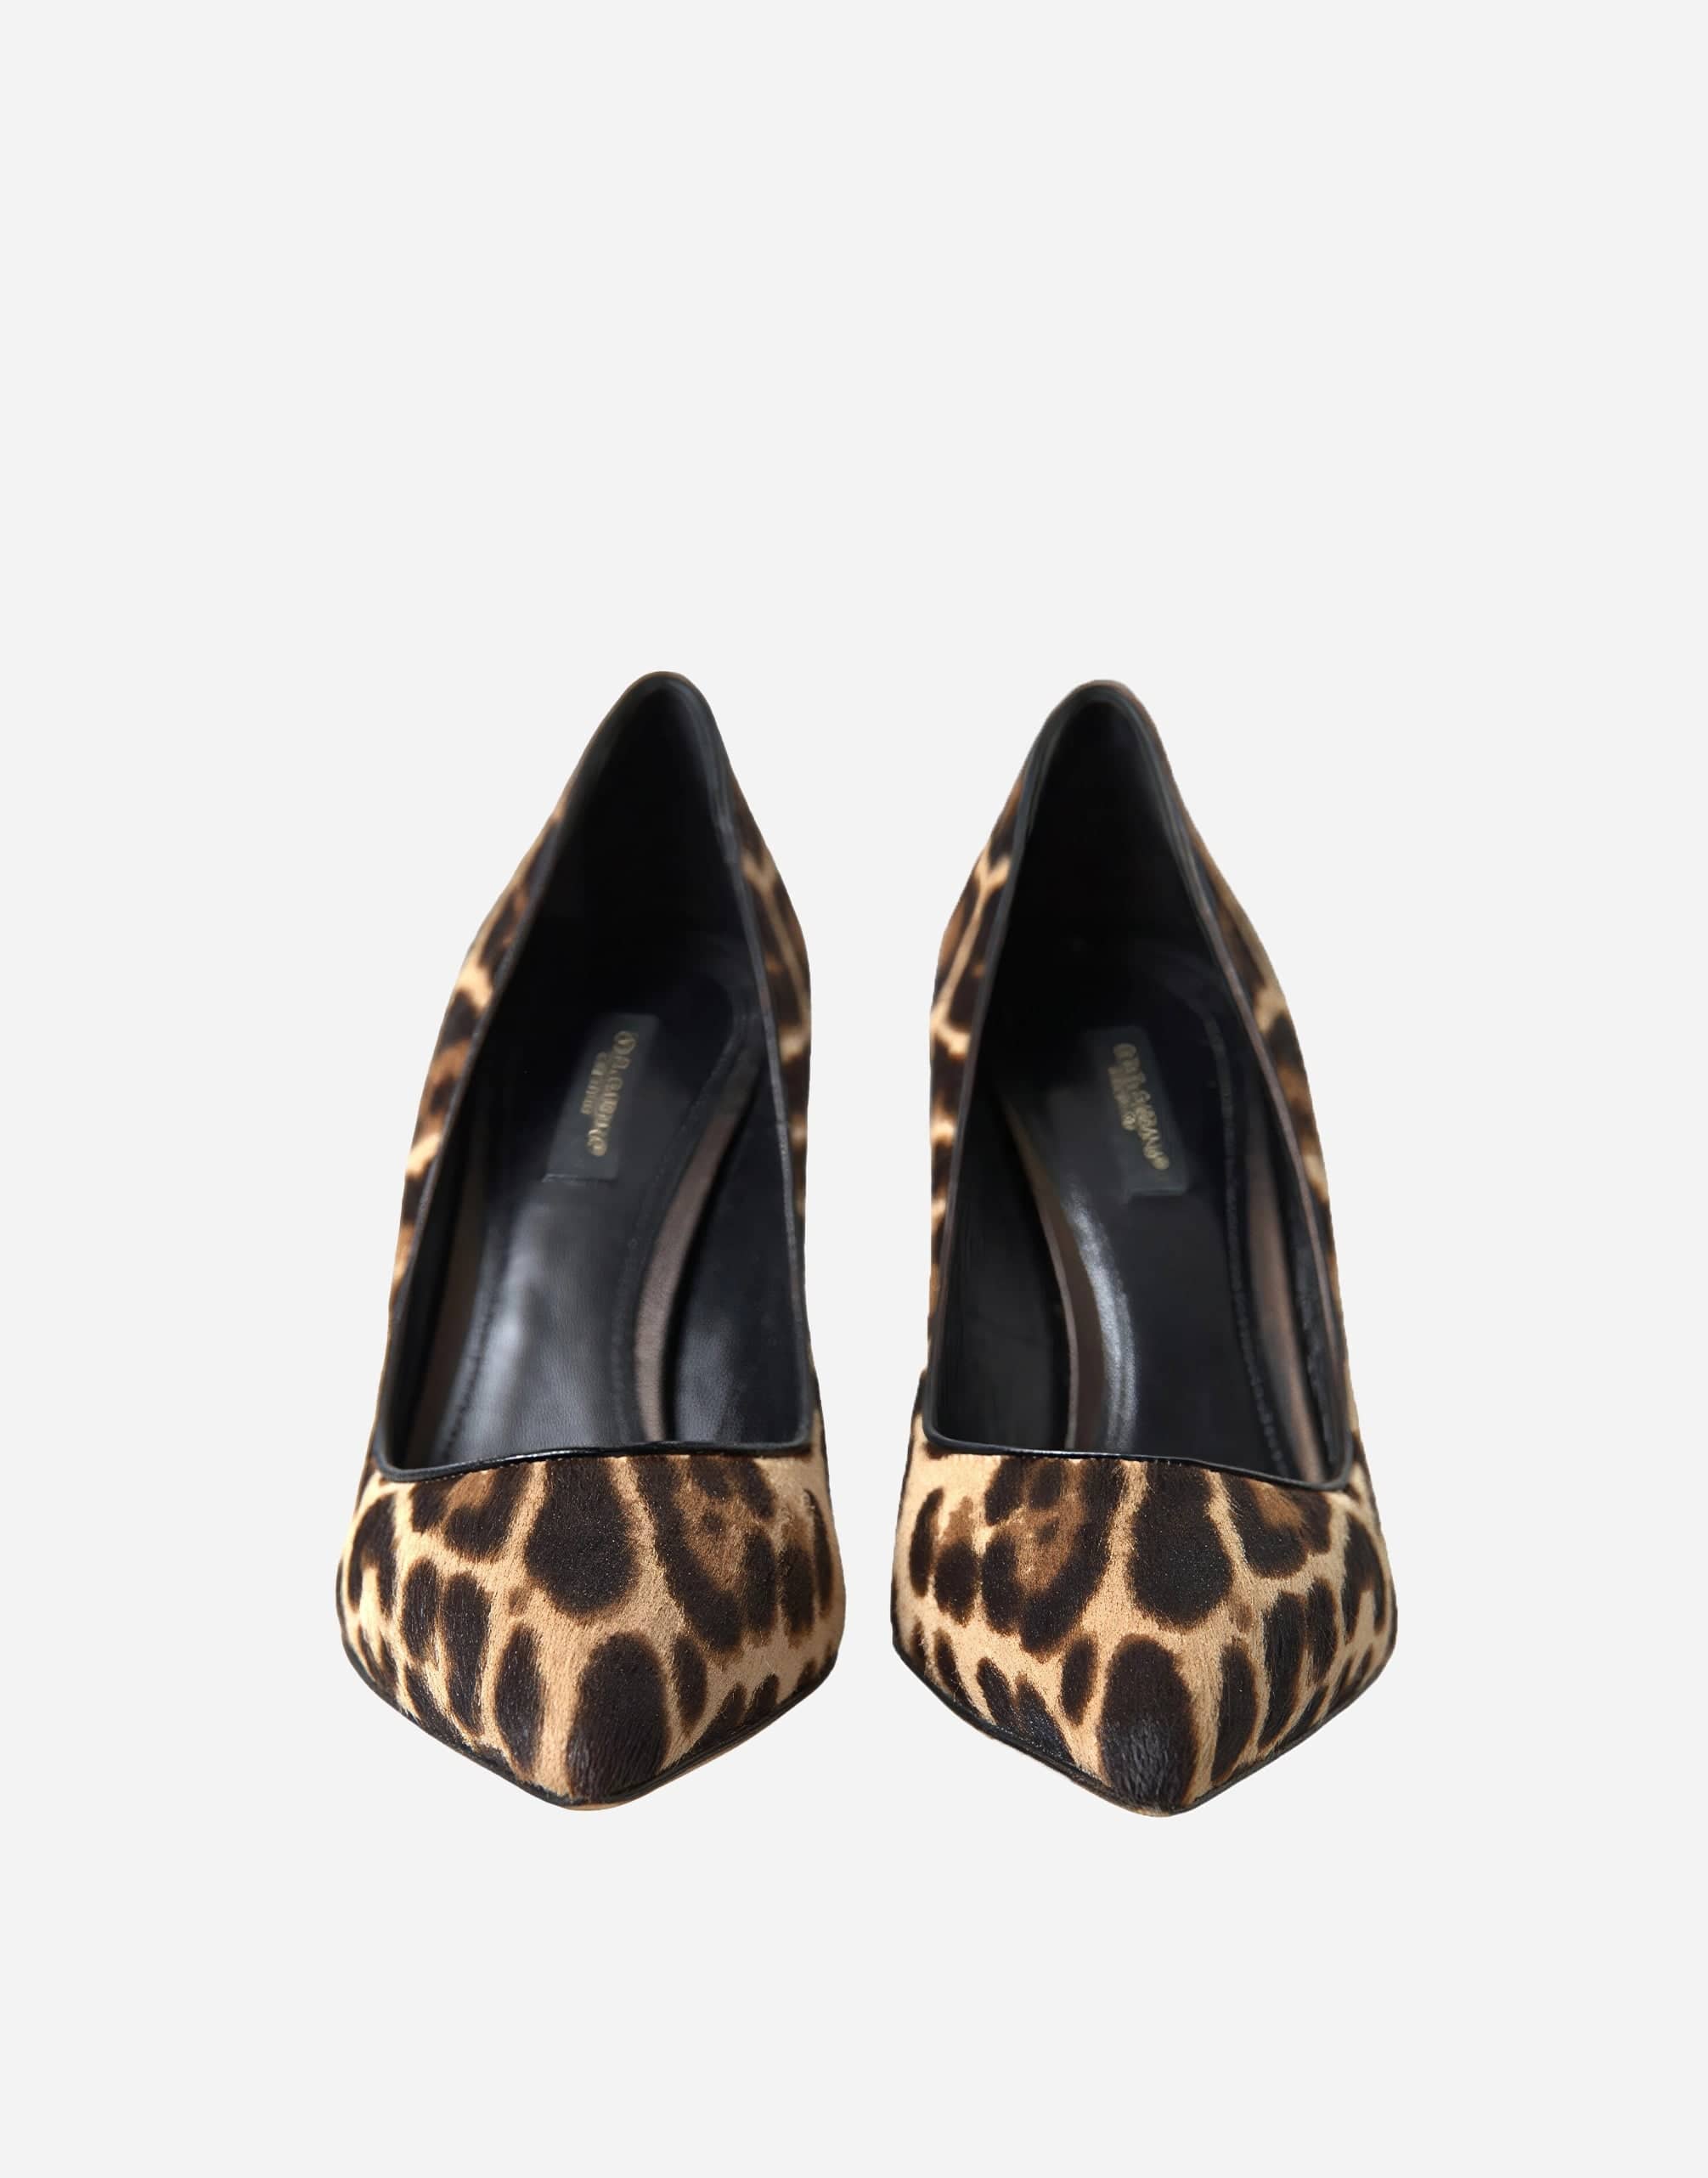 Dolce & Gabbana Leopard Print Stiletto Pumps